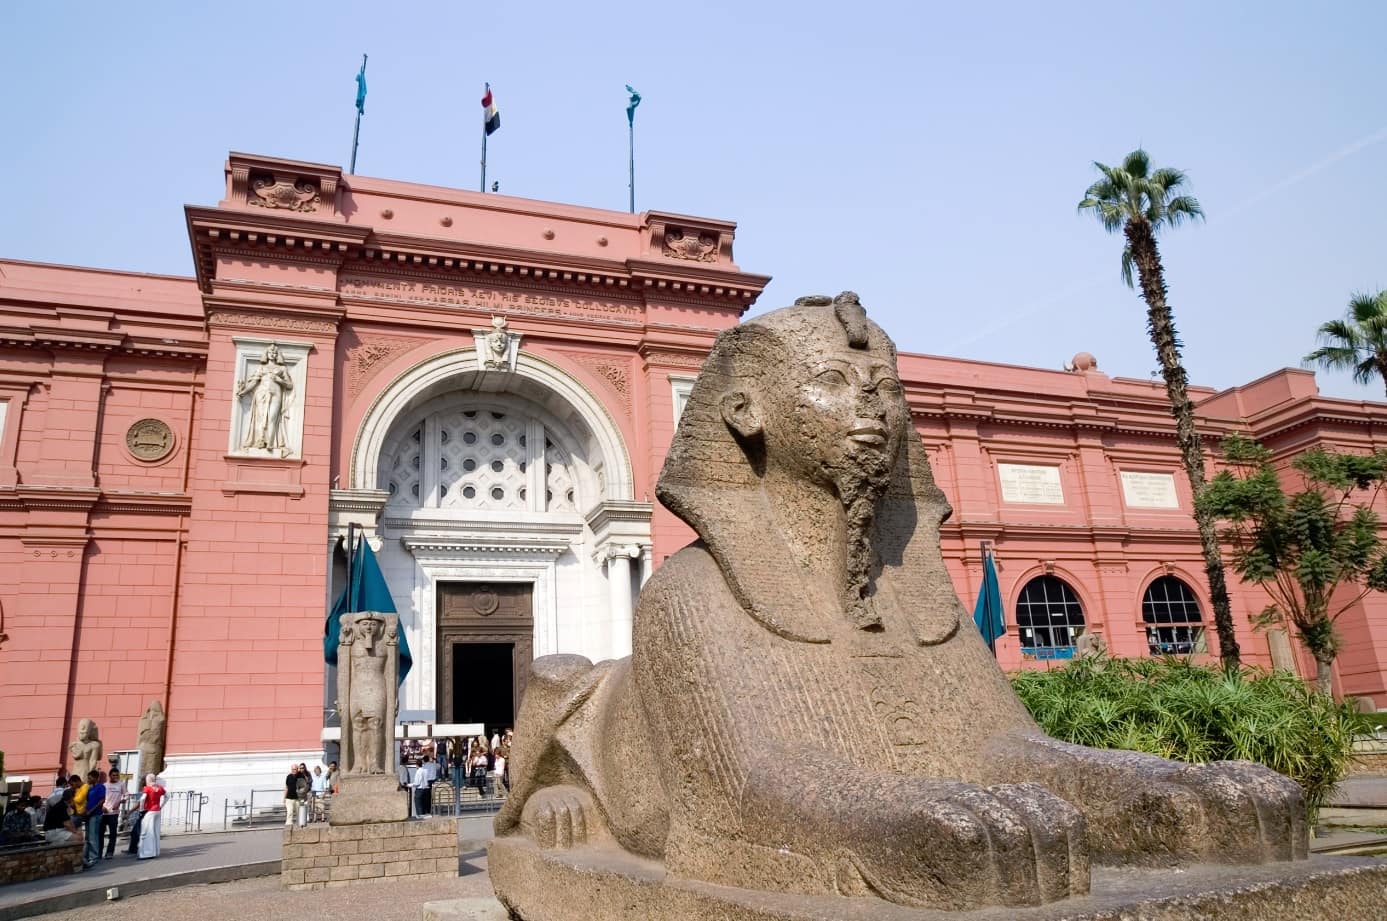 The Egyptian Museum, Citadel, and Khan el-Khalili (3)